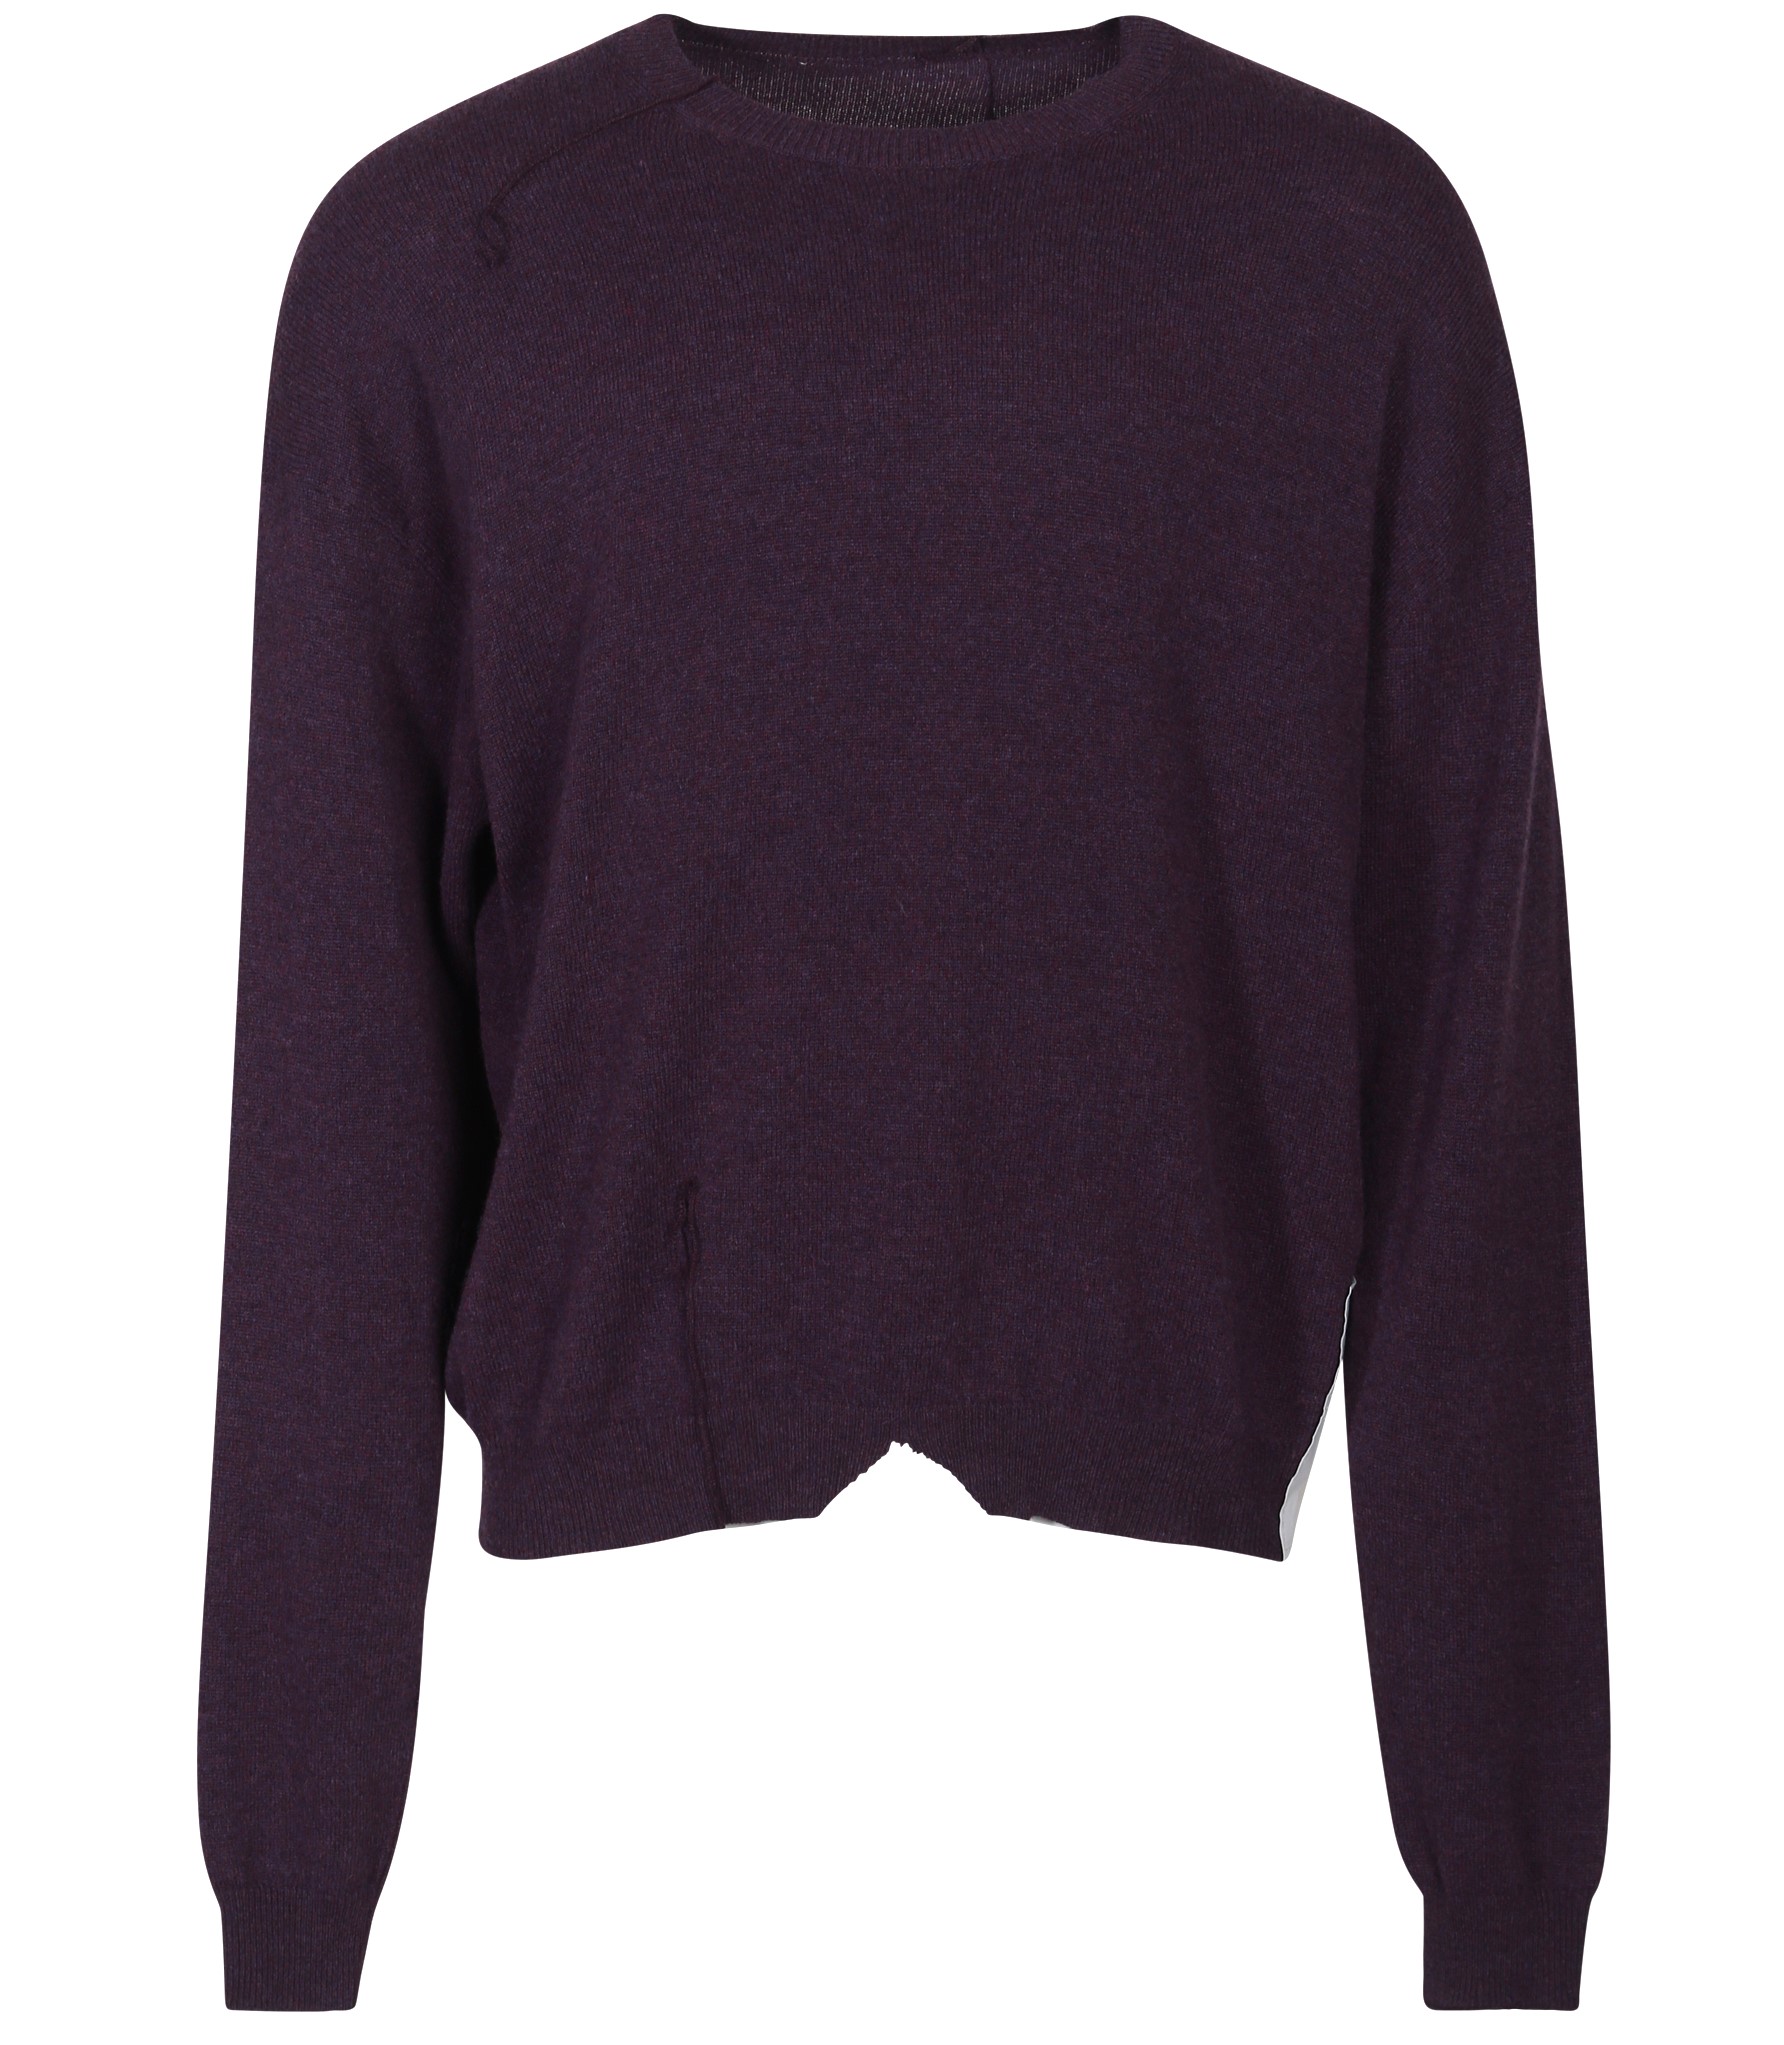 RAMAEL Infinity Cashmere Sweater in Aubergine XS